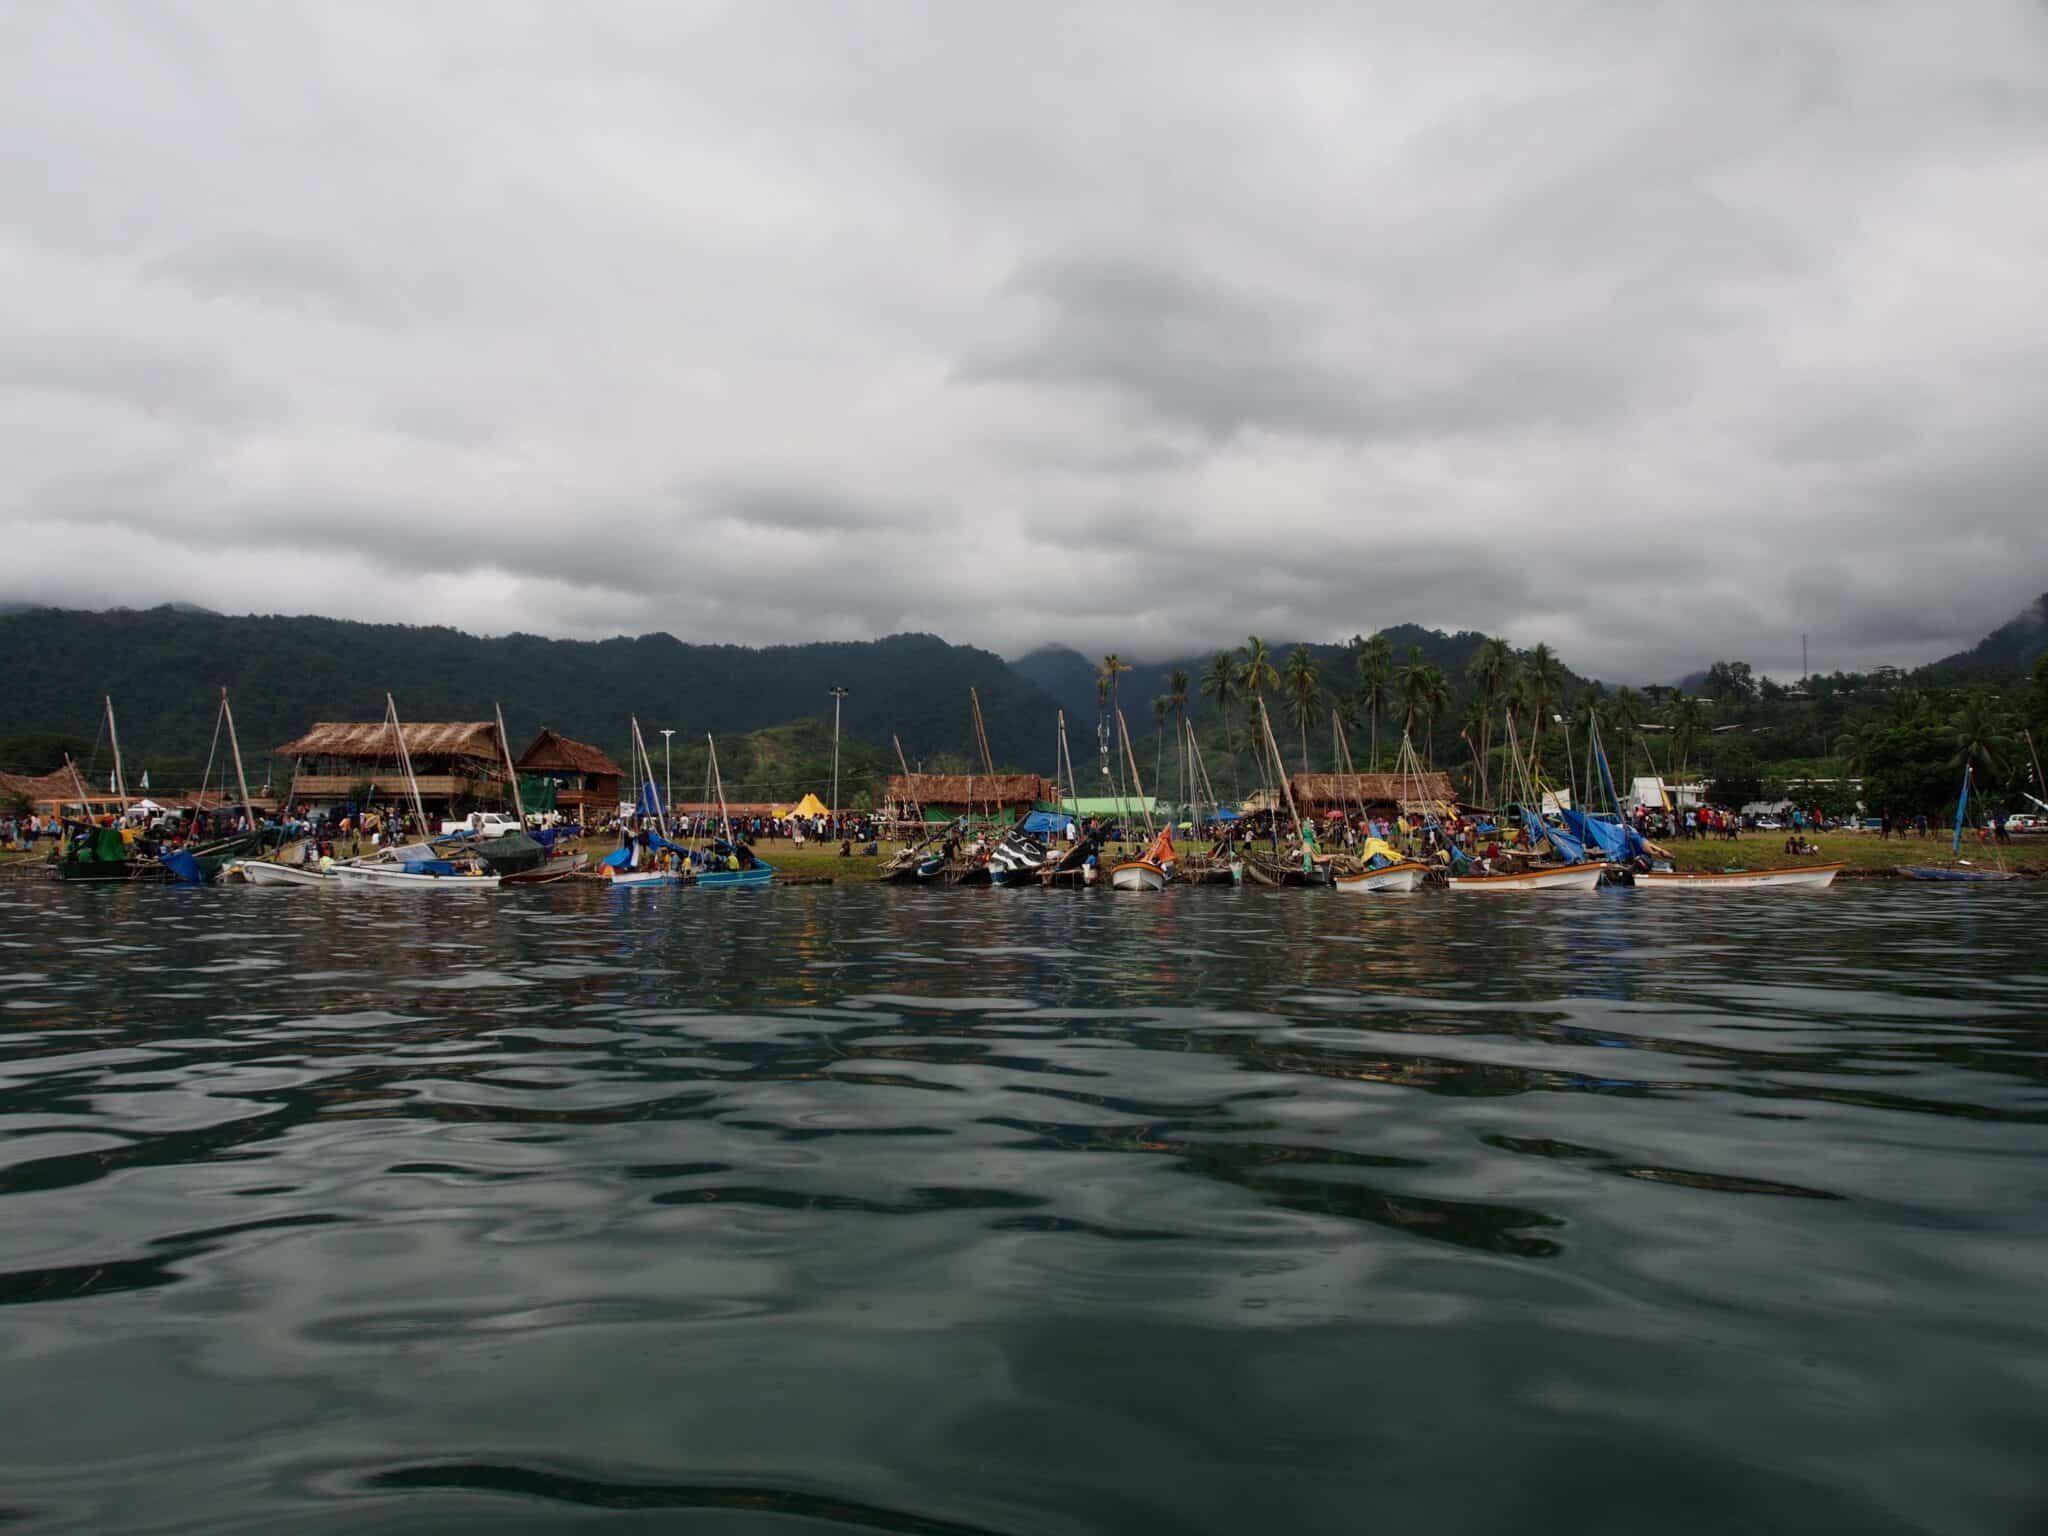 Alotau Canoe Festival from the water